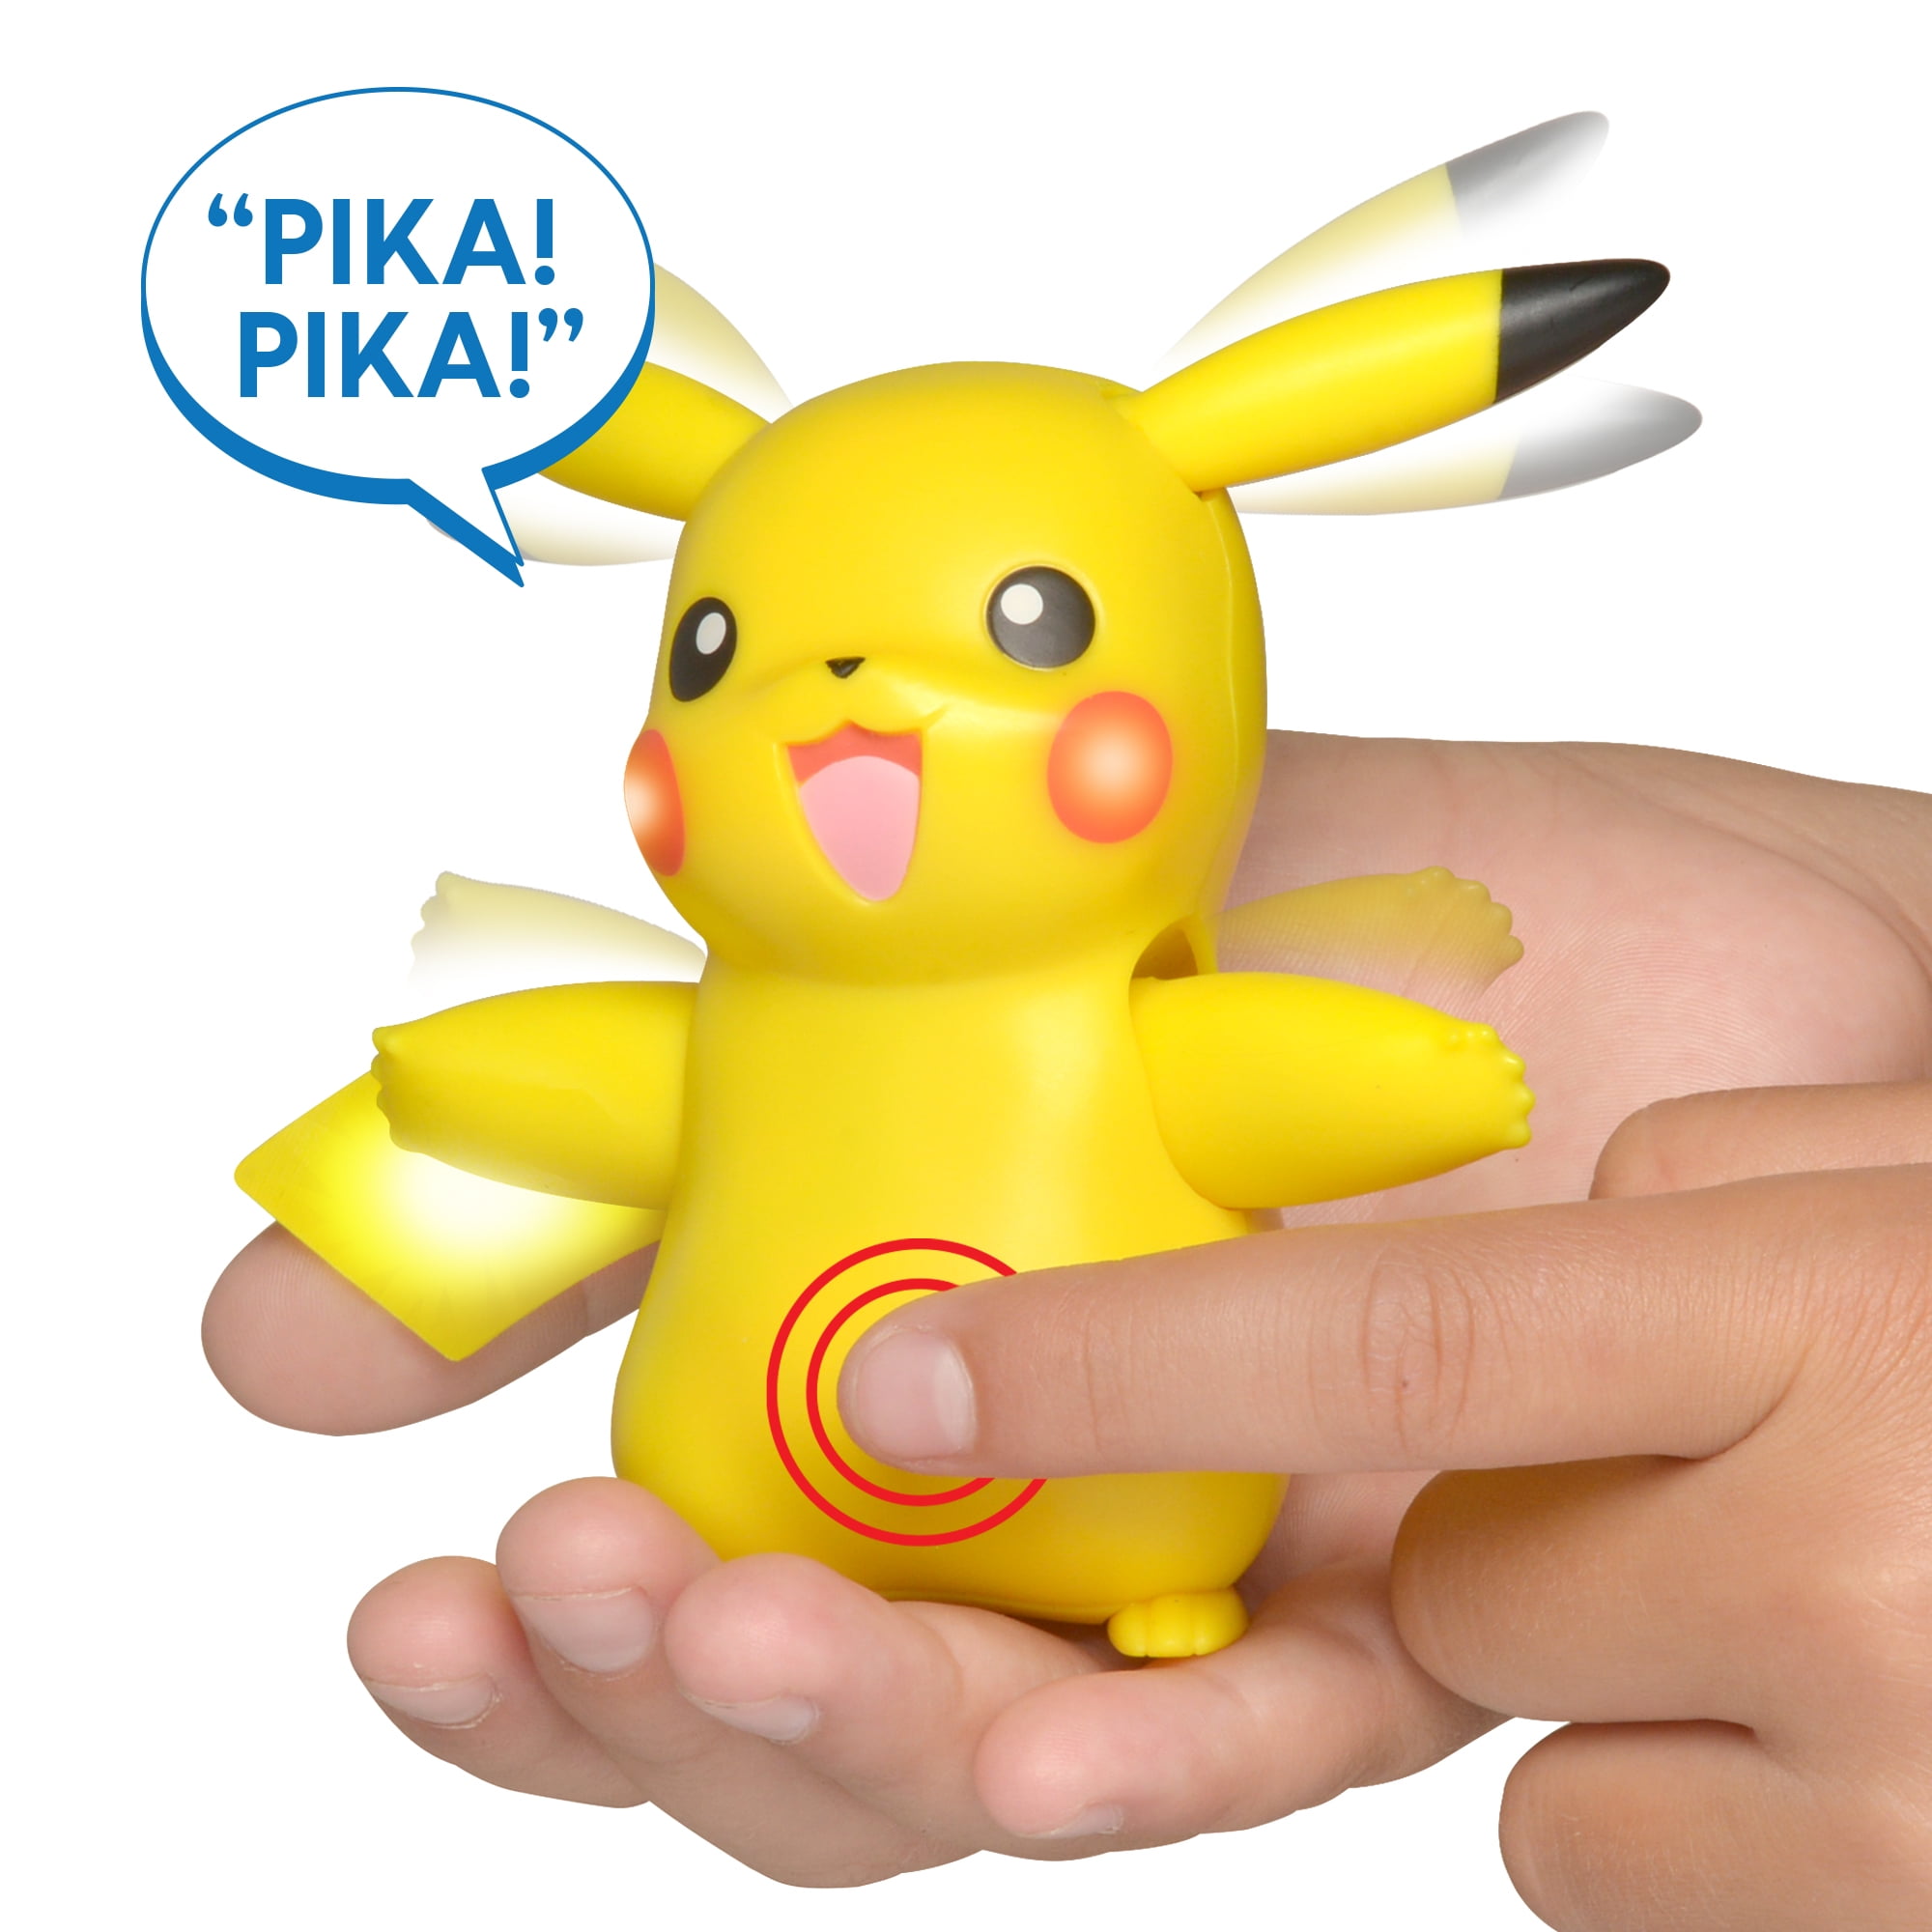 Reactions Details about   Pokemon My Partner Pikachu Interactive Electronic Figure Sounds 100 